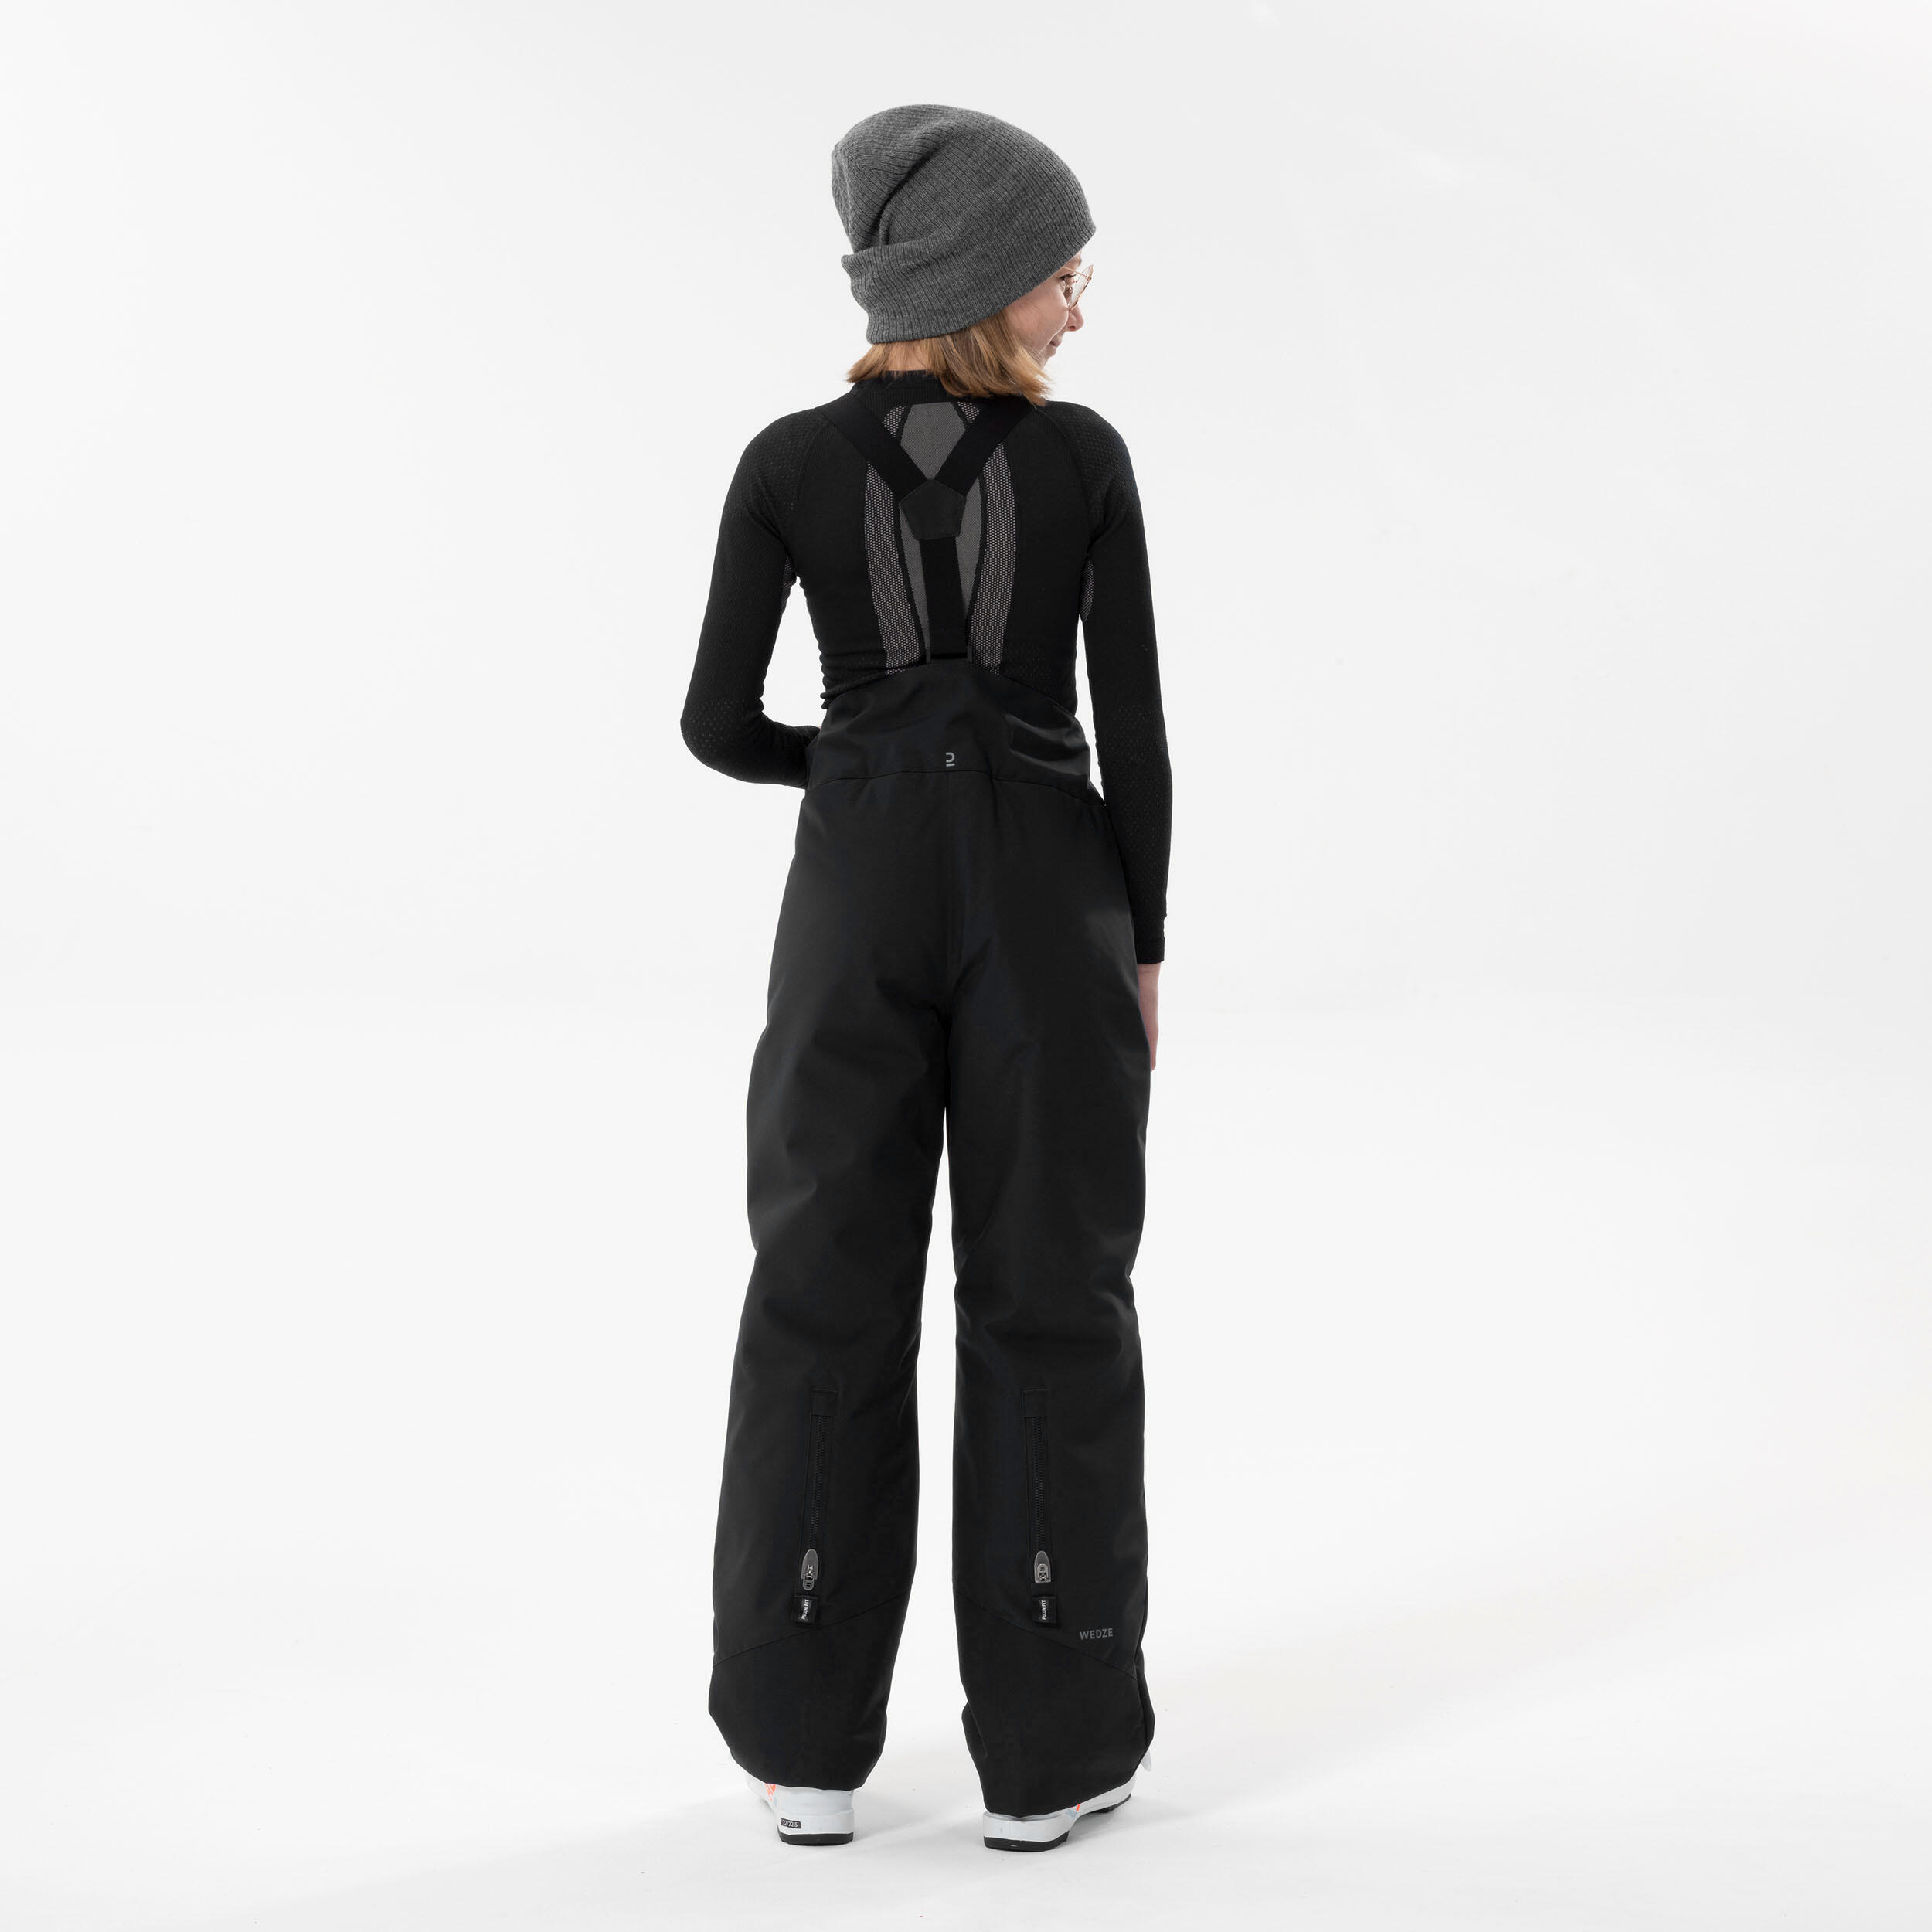 Snow Pants Child Size 6 OP Sport Black Micro Fleece Lined Inside New D –  KidsStuffCanada